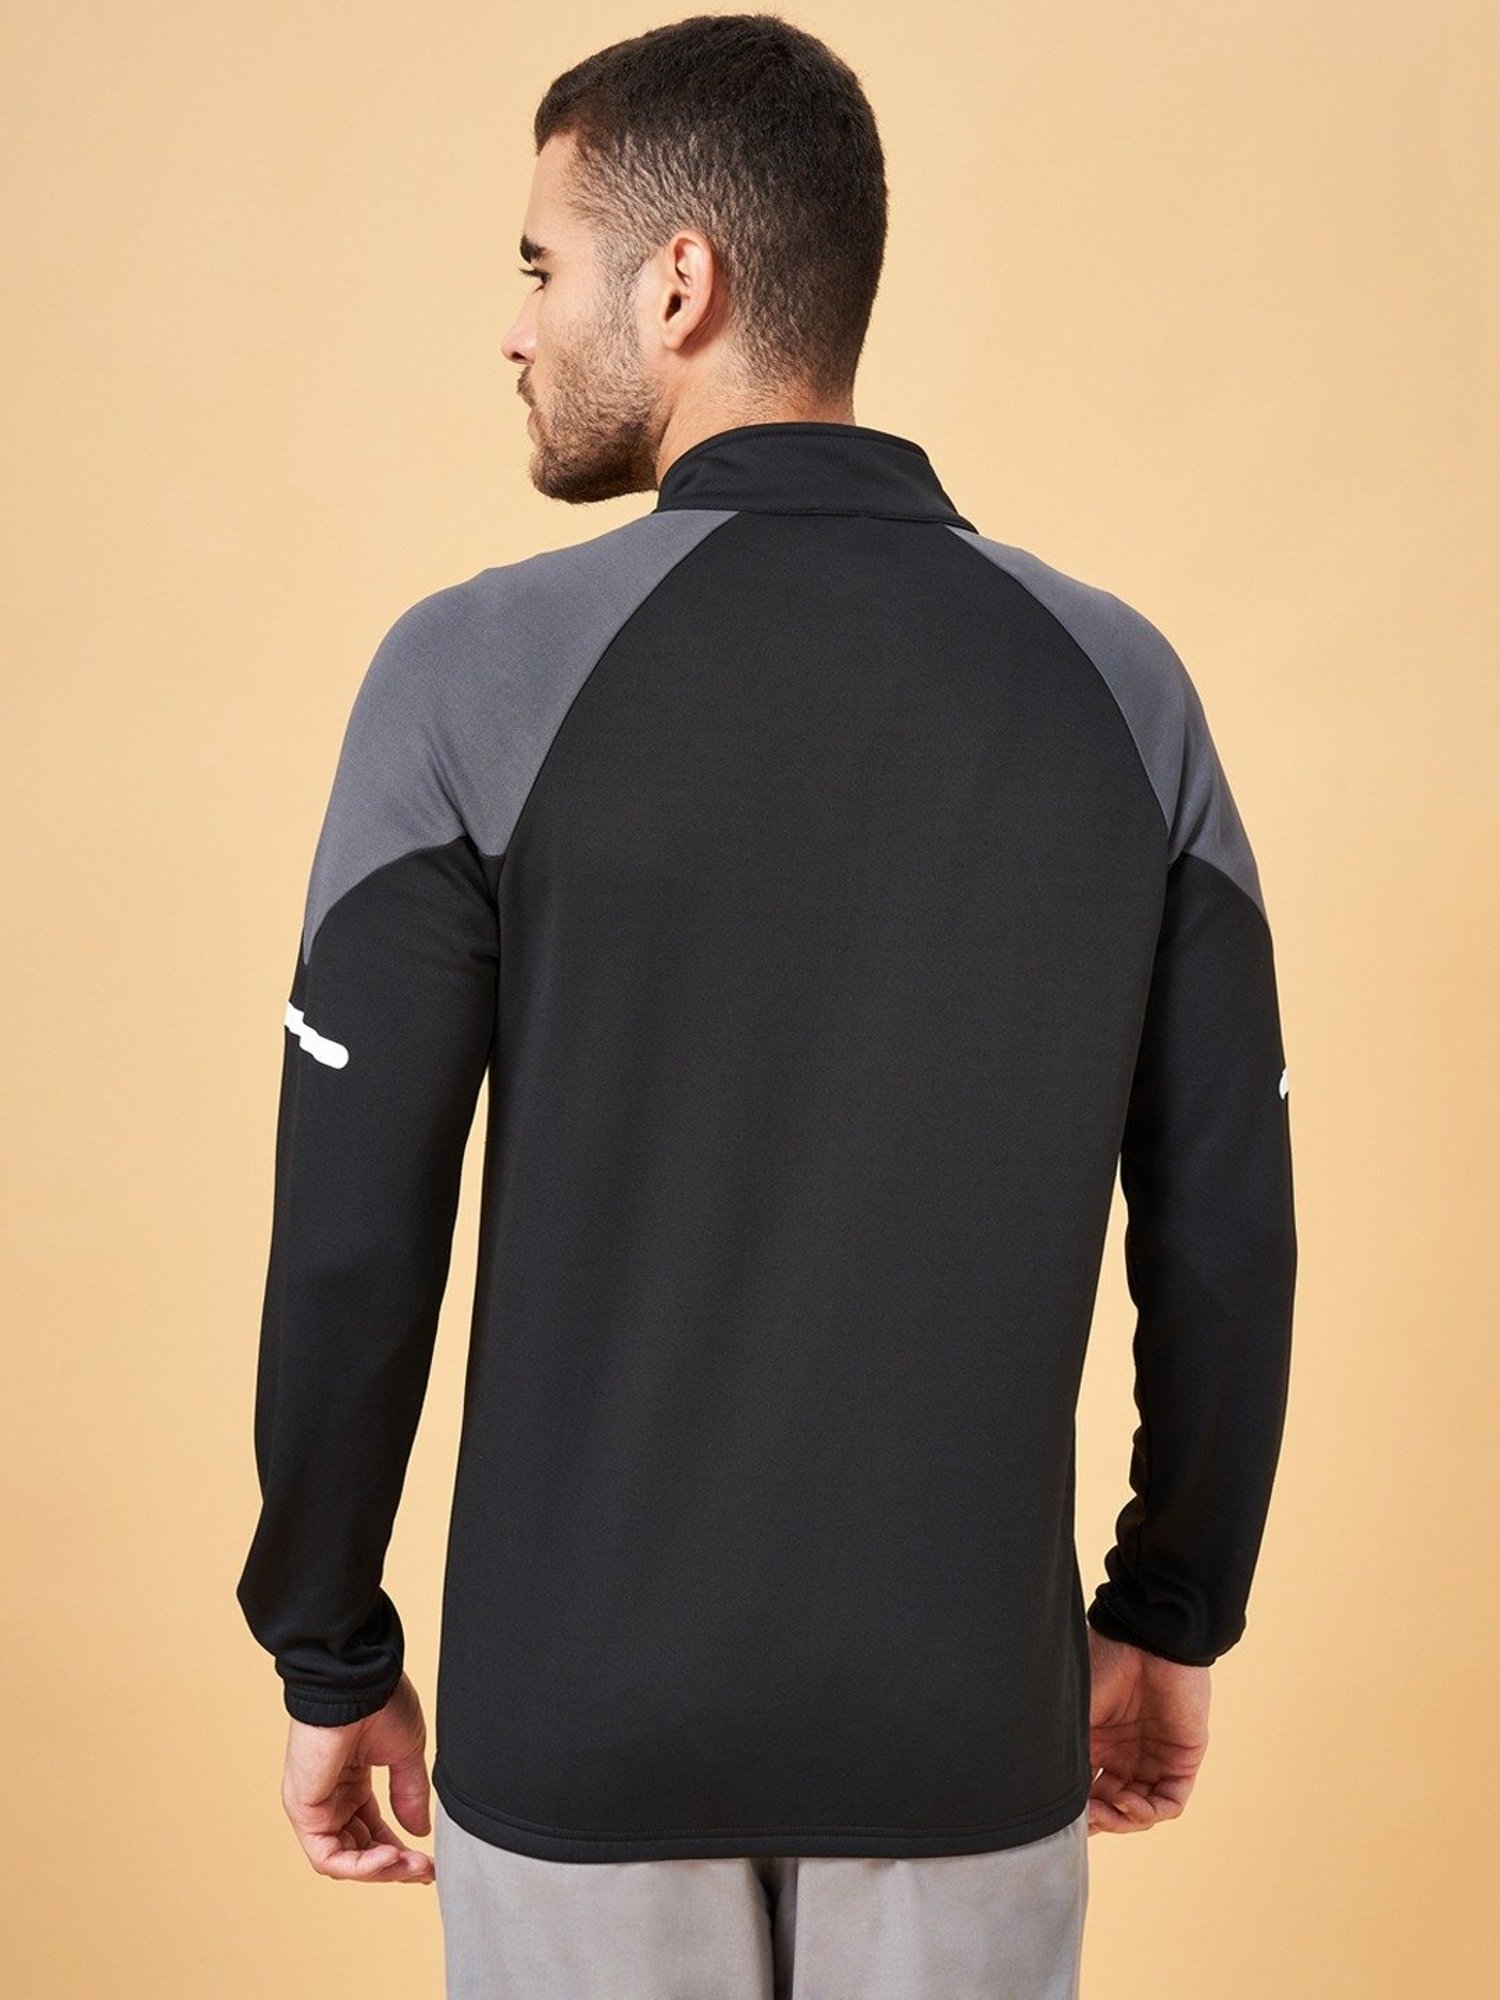 Urban Ranger by Pantaloons Grey & Black Regular Fit Colour Block Sweatshirt